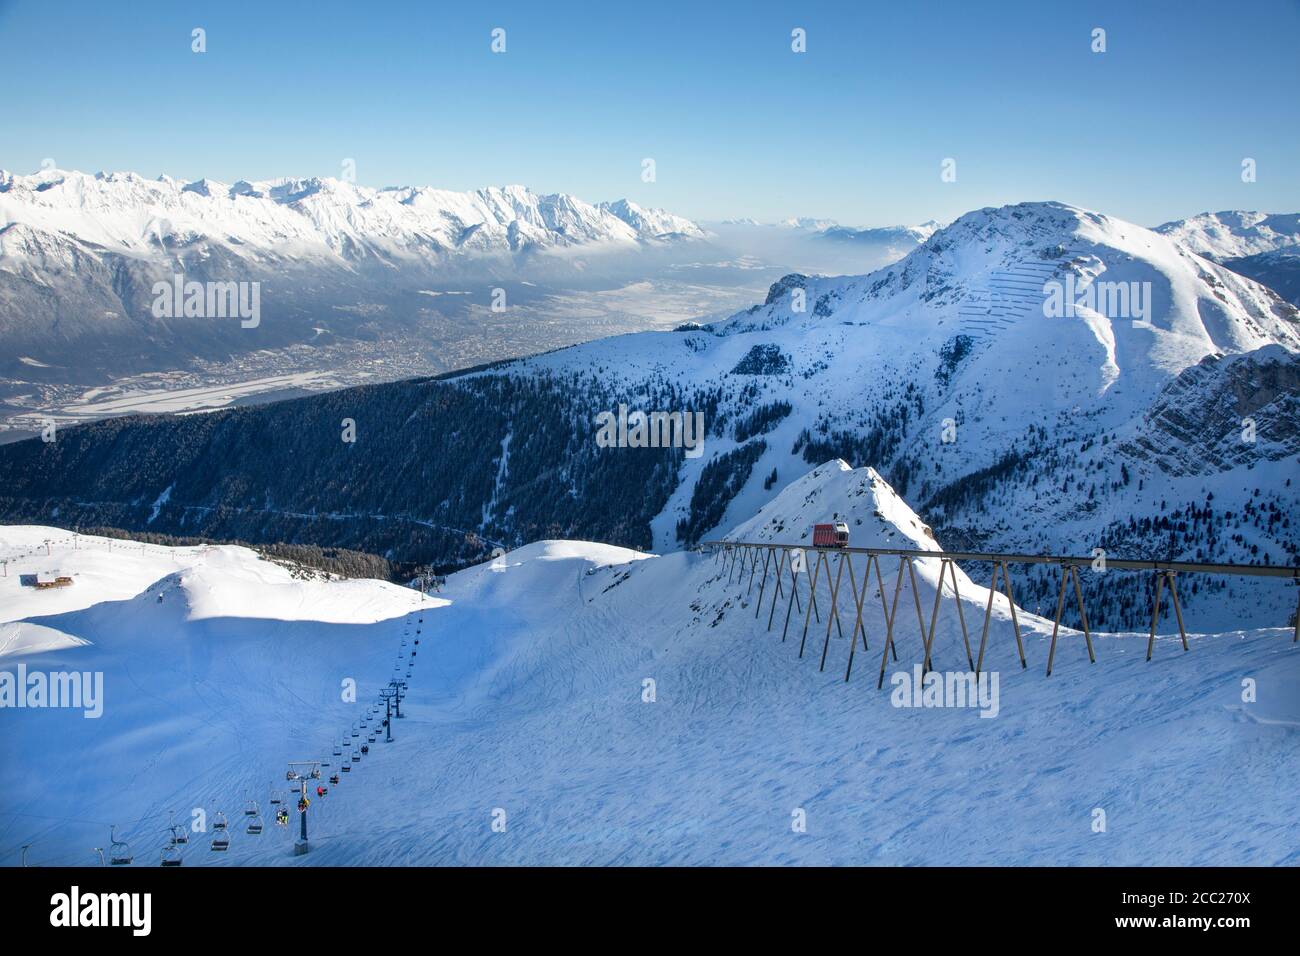 Austria, Innsbruck, View of Olympic mountain railway at Axamer Lizum Stock Photo